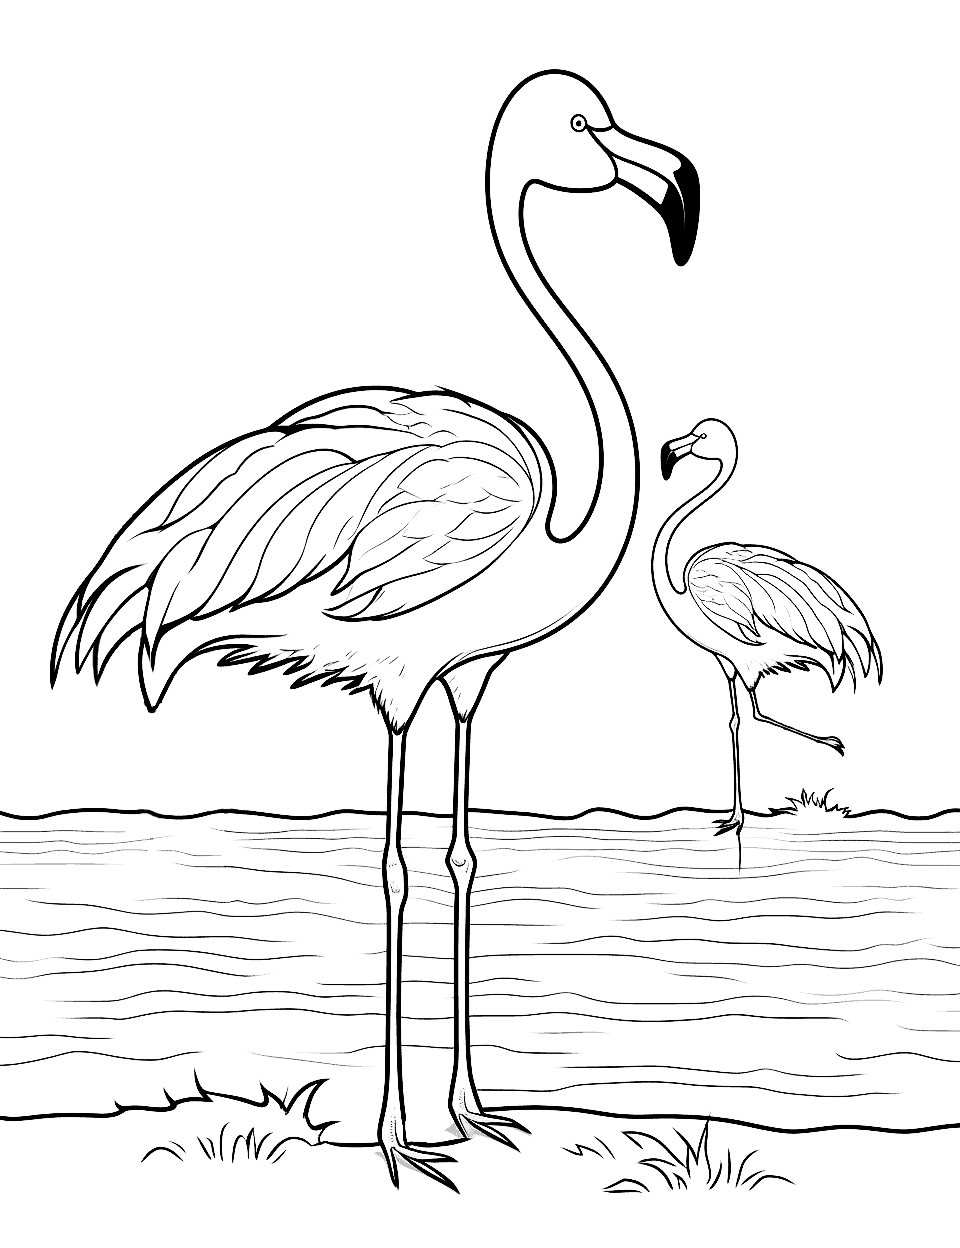 Flamingo Paradise Animal Coloring Page - A flock of elegant flamingos wading in a beautiful lagoon.